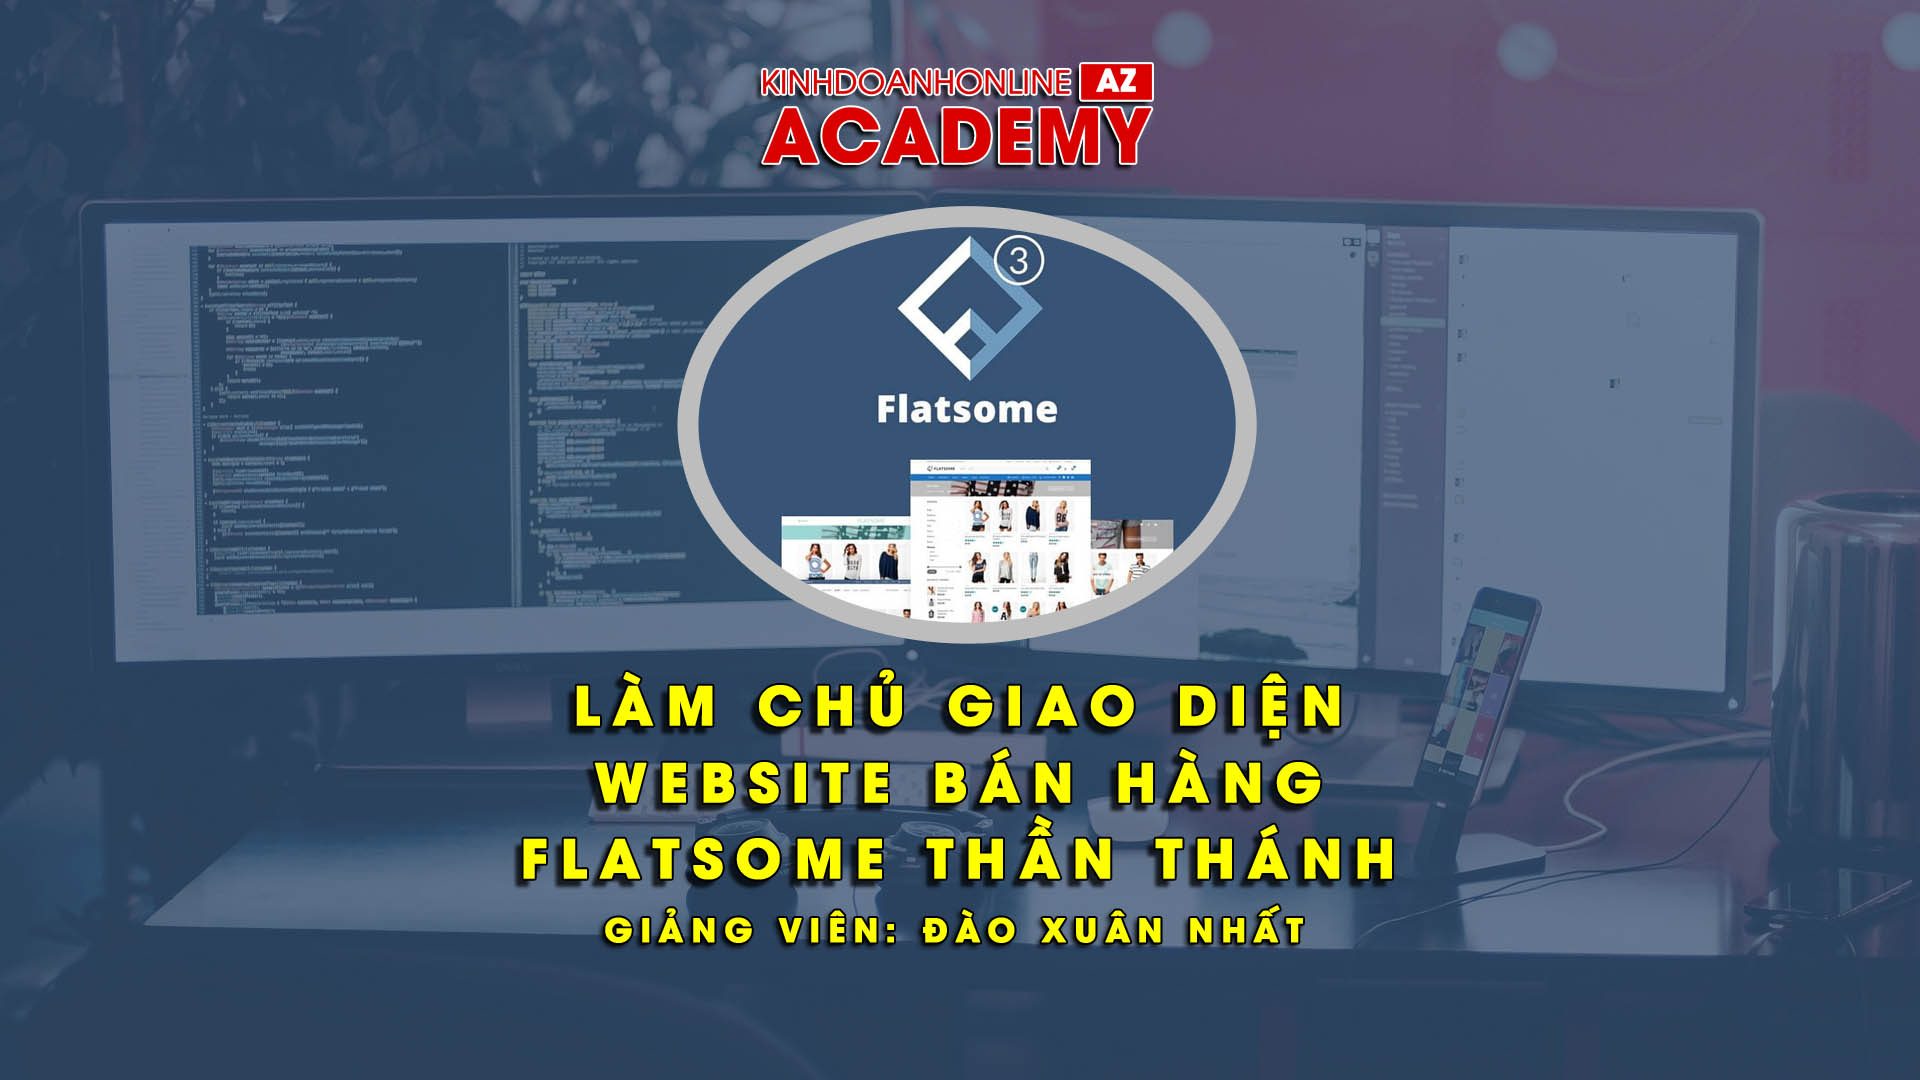 lam-chu-giao-dien-website-ban-hang-dinh-cao-flatsome